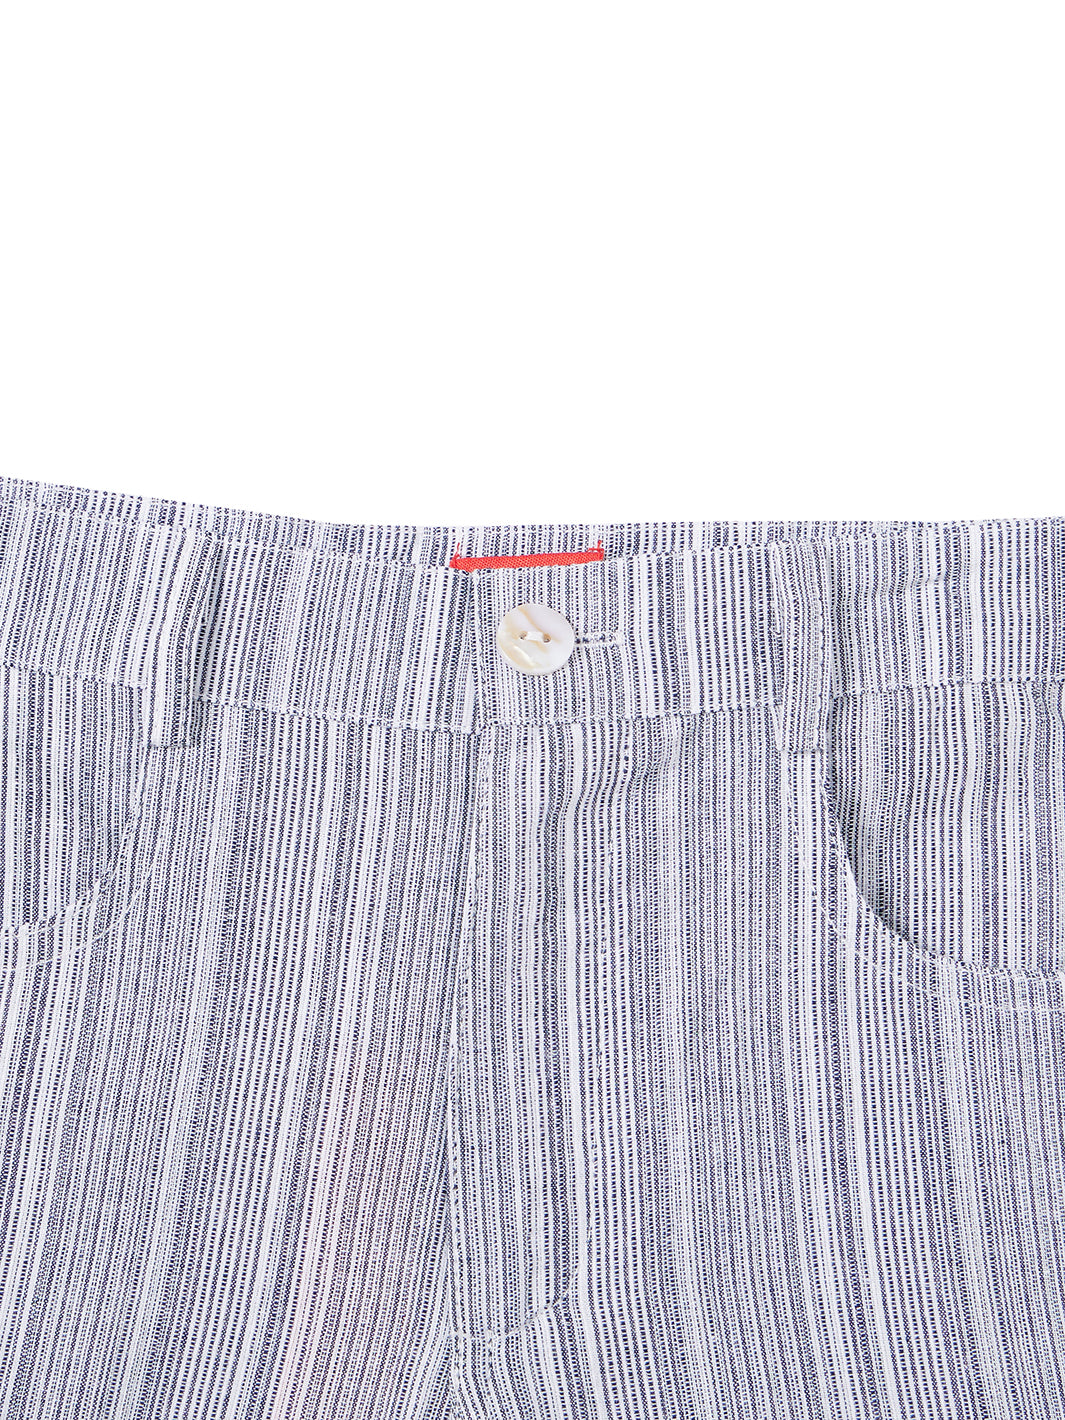 Short Stripe Pants - Navy/White